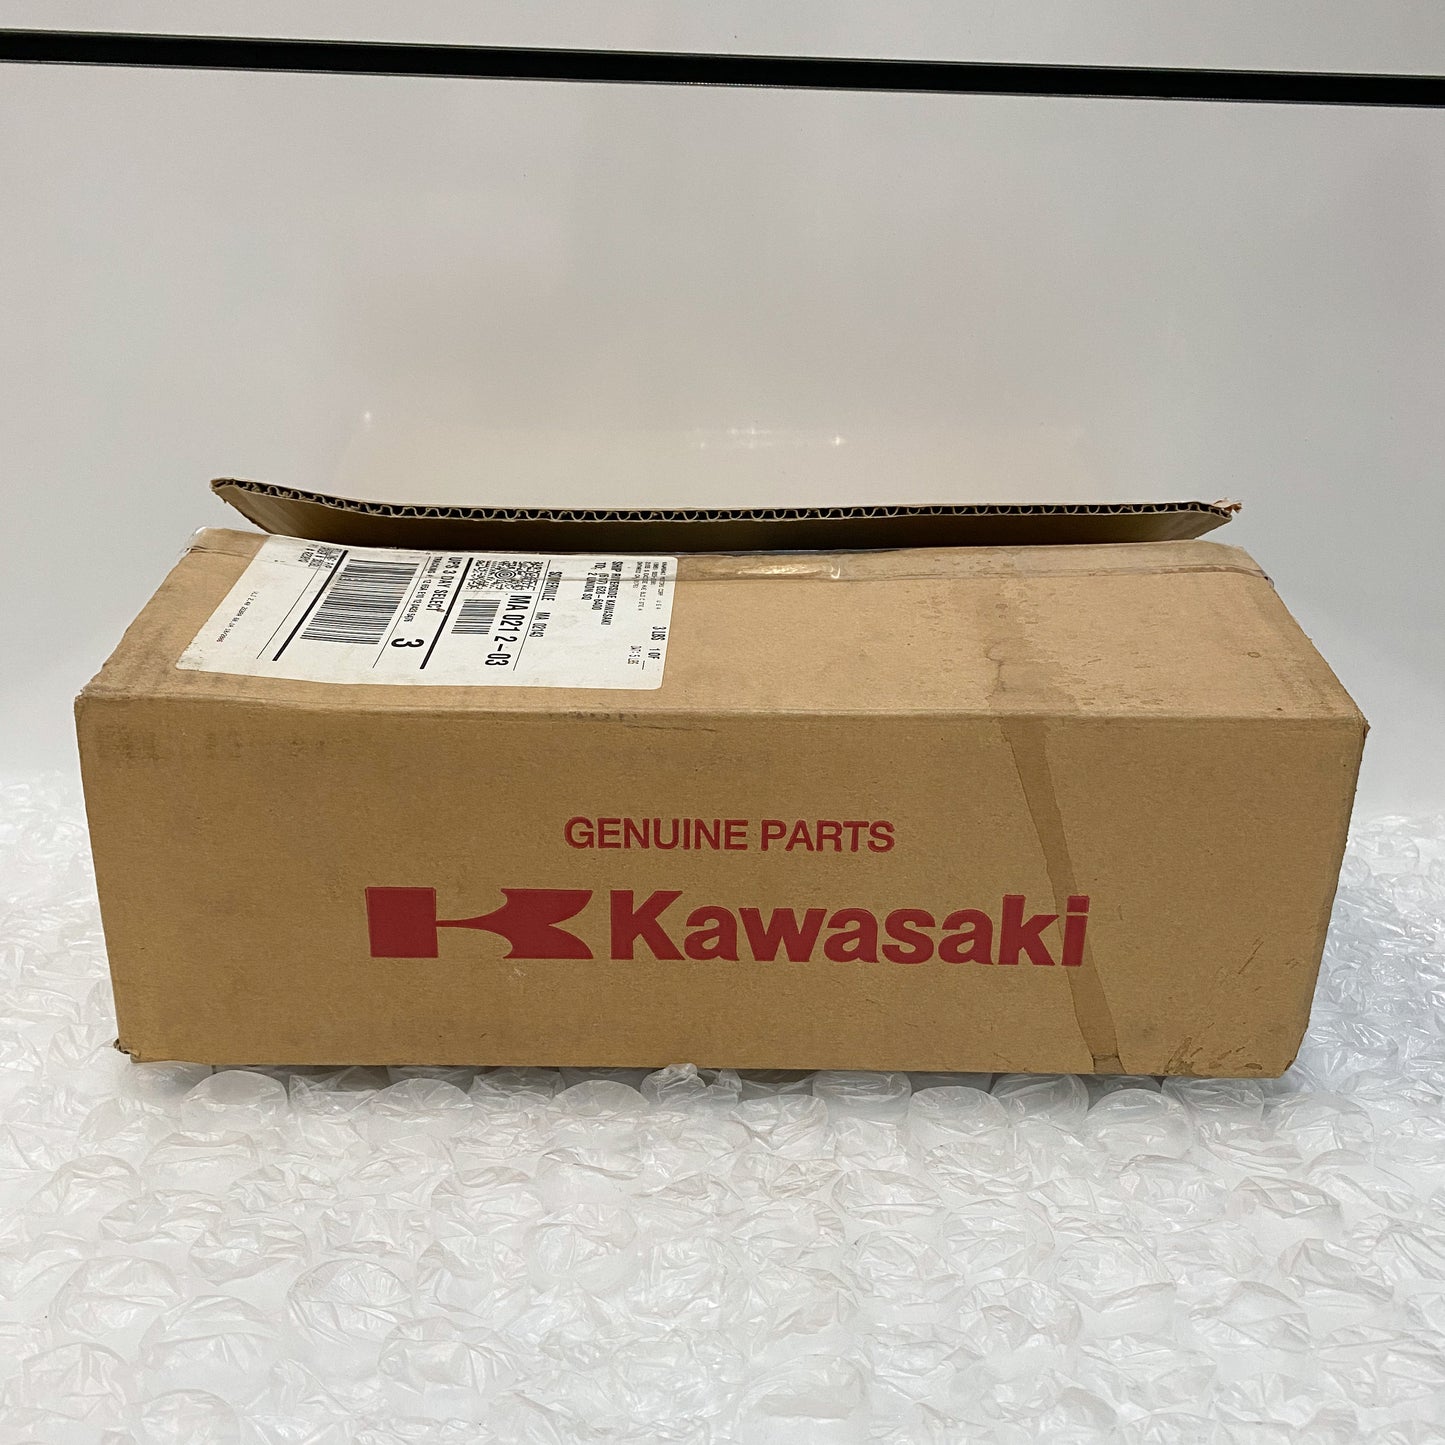 Kawasaki ZX600 '07 Seat Cover Kit, Silver 99996-1354-17M